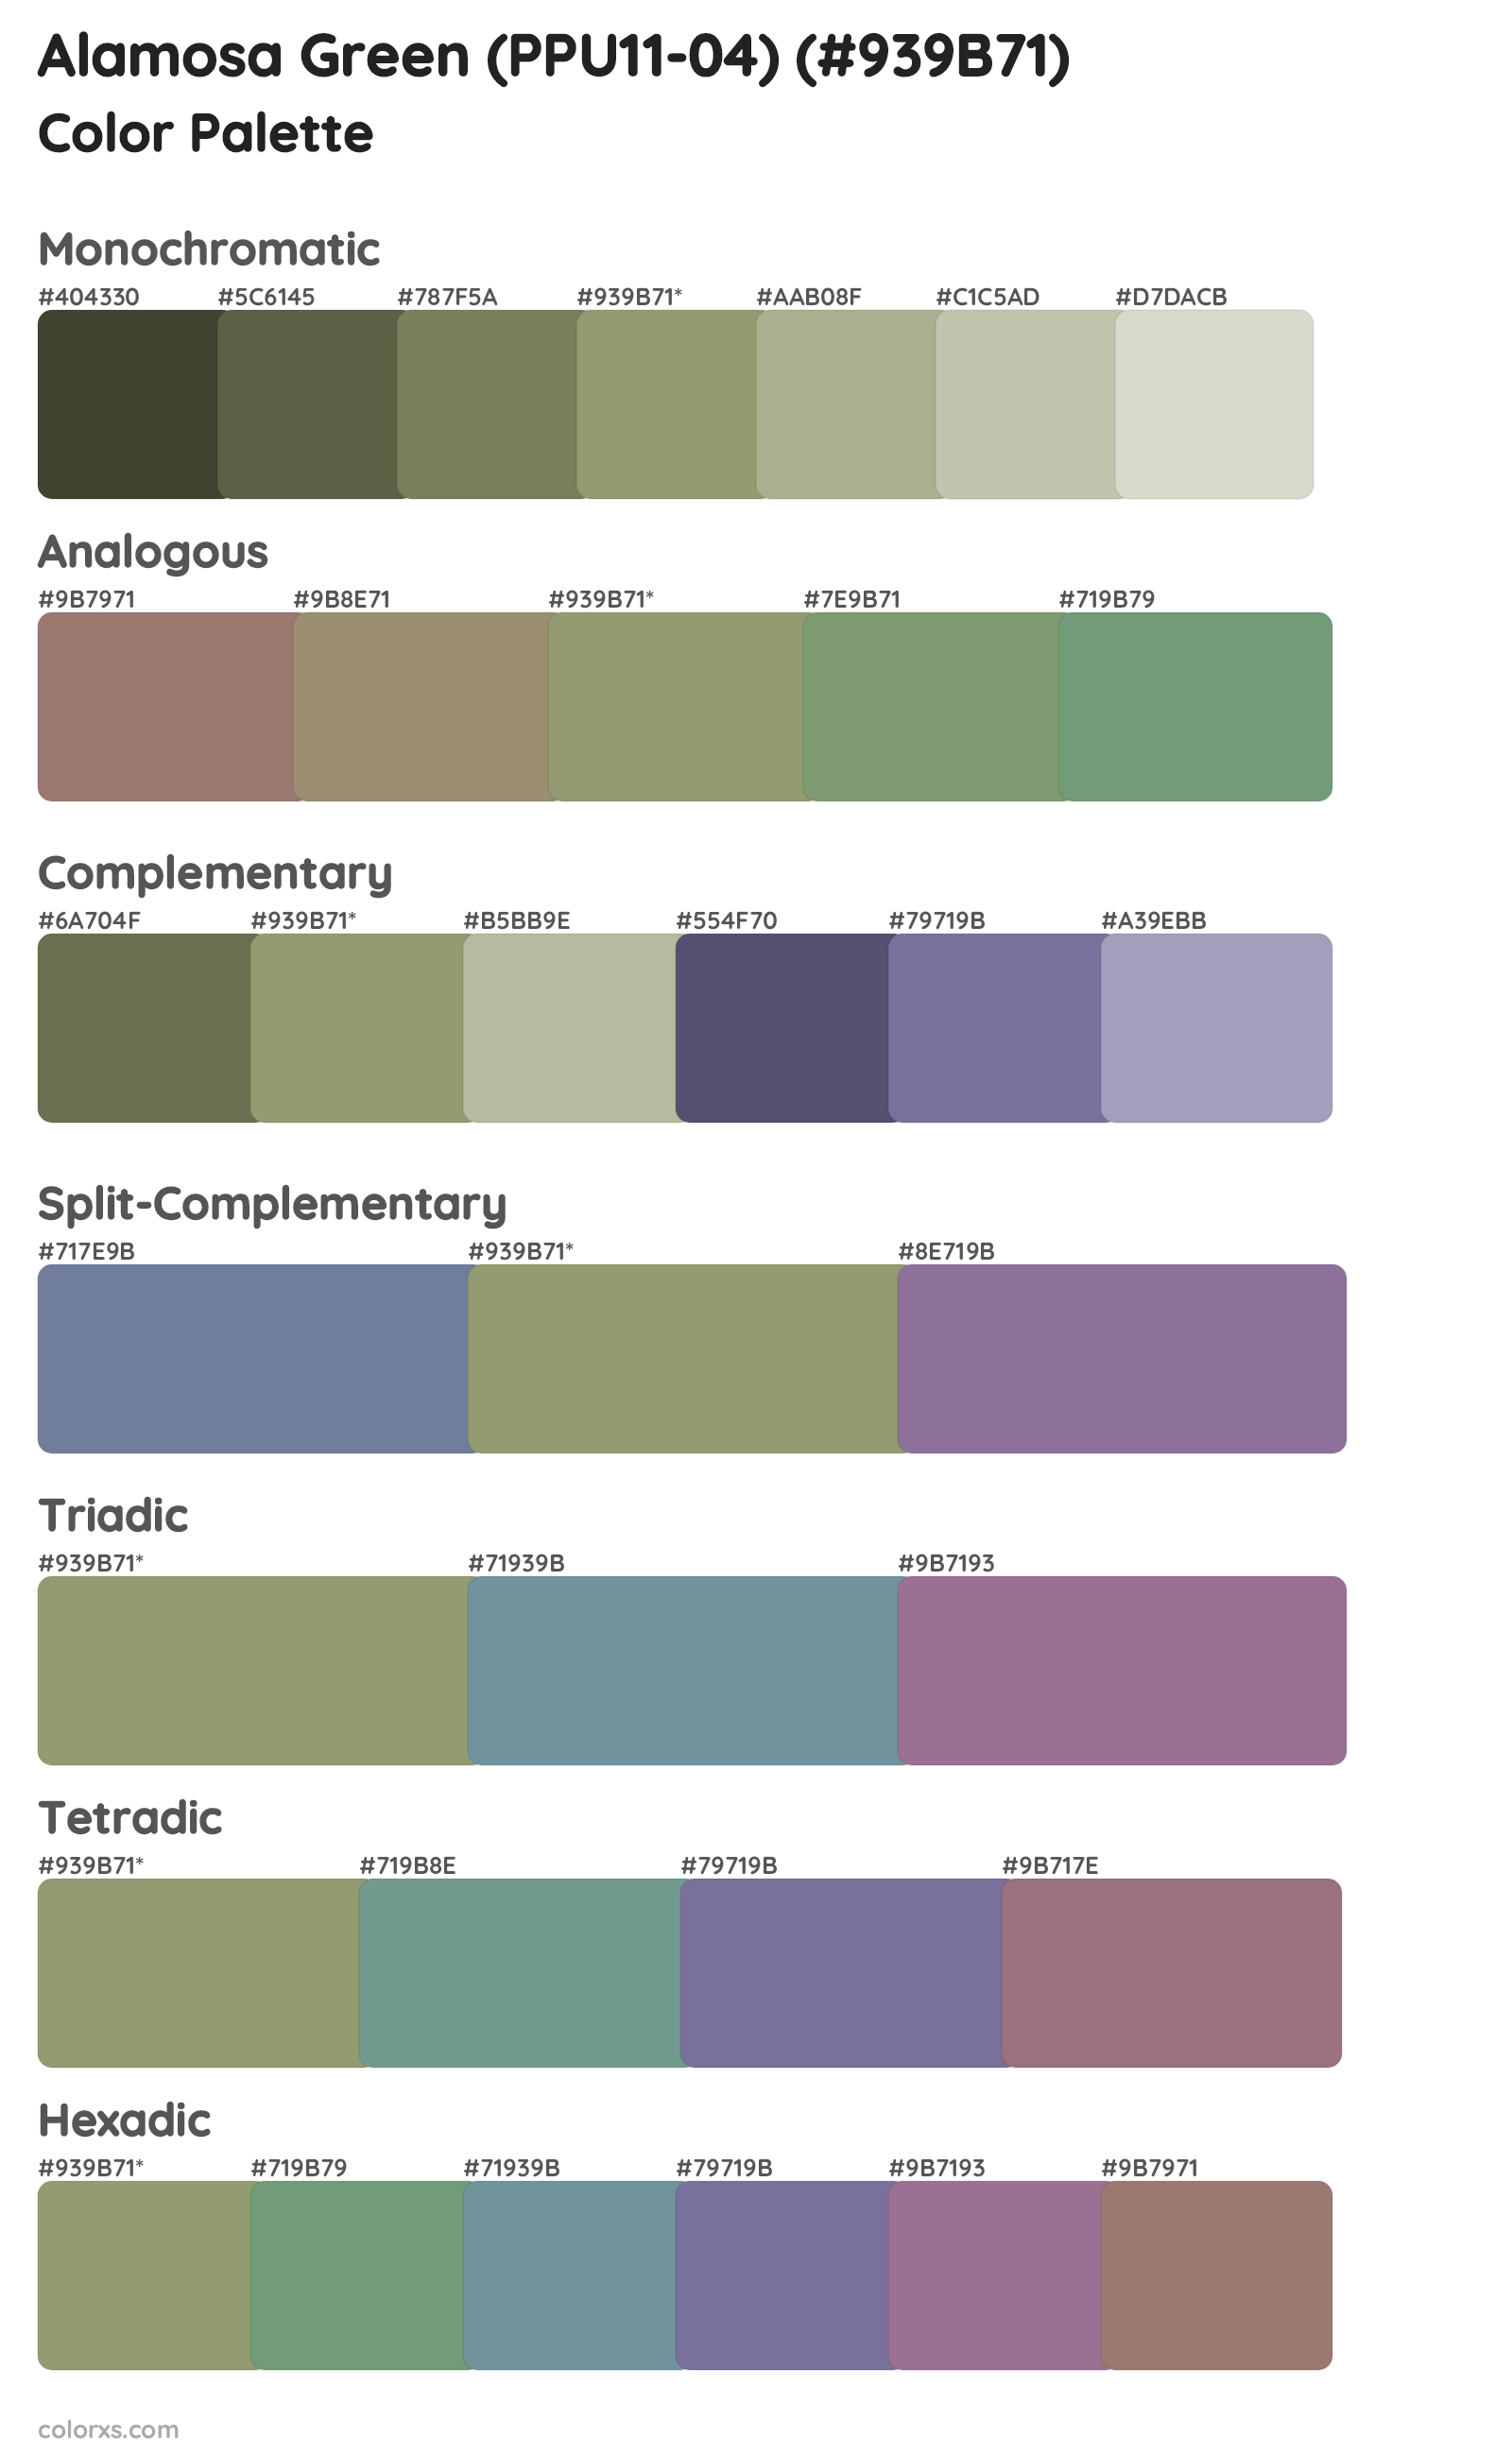 Alamosa Green (PPU11-04) Color Scheme Palettes